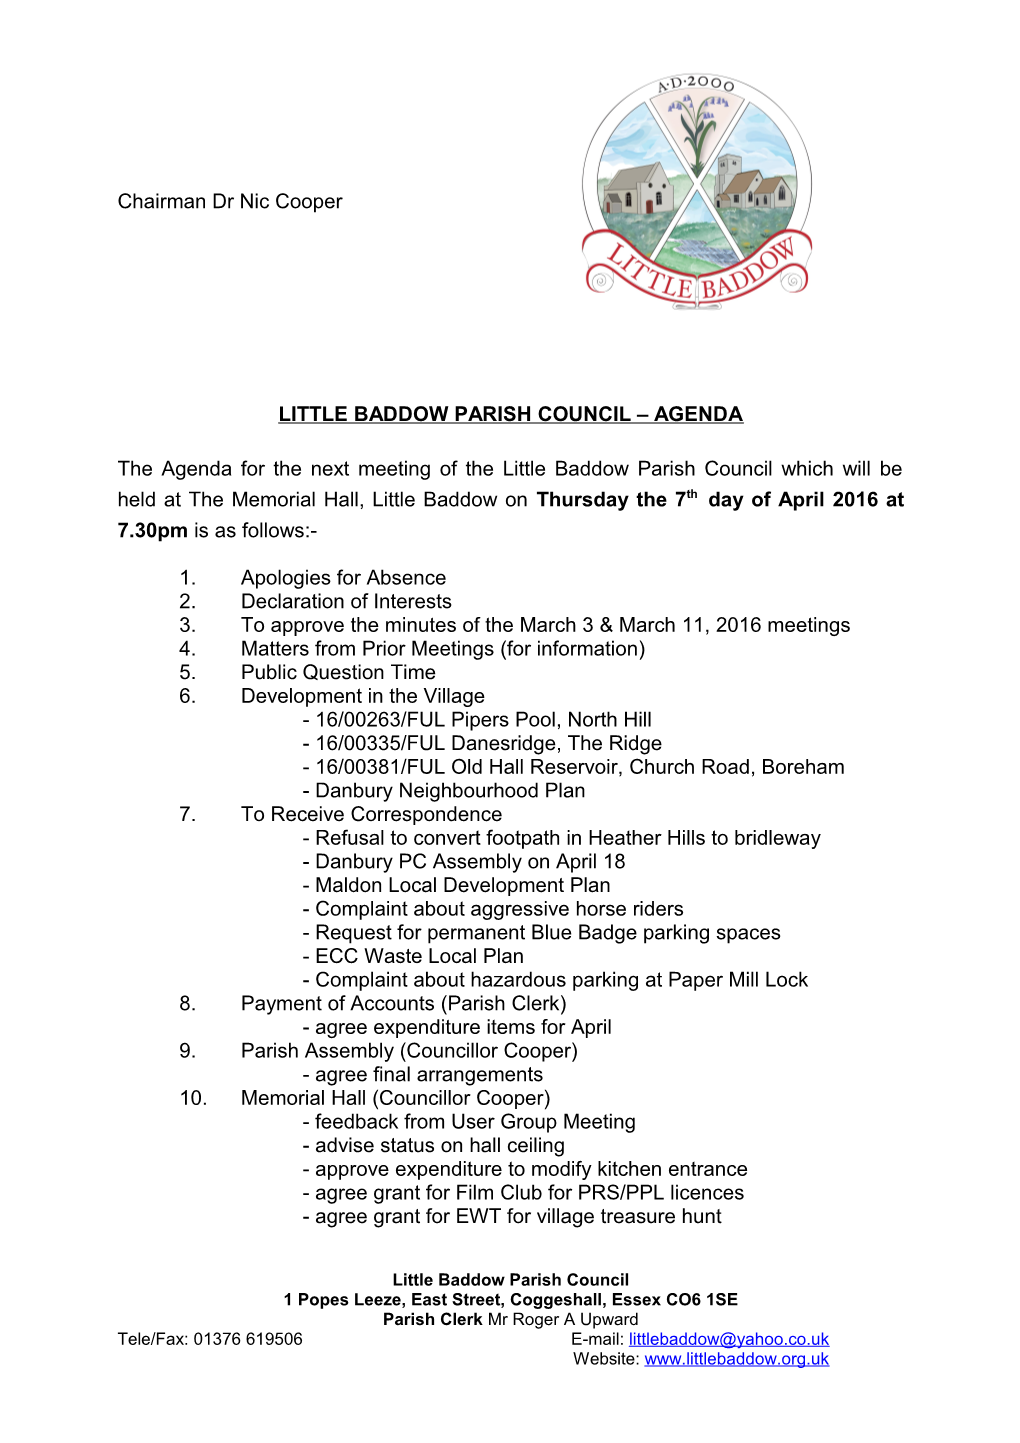 Little Baddow Parish Council Agenda